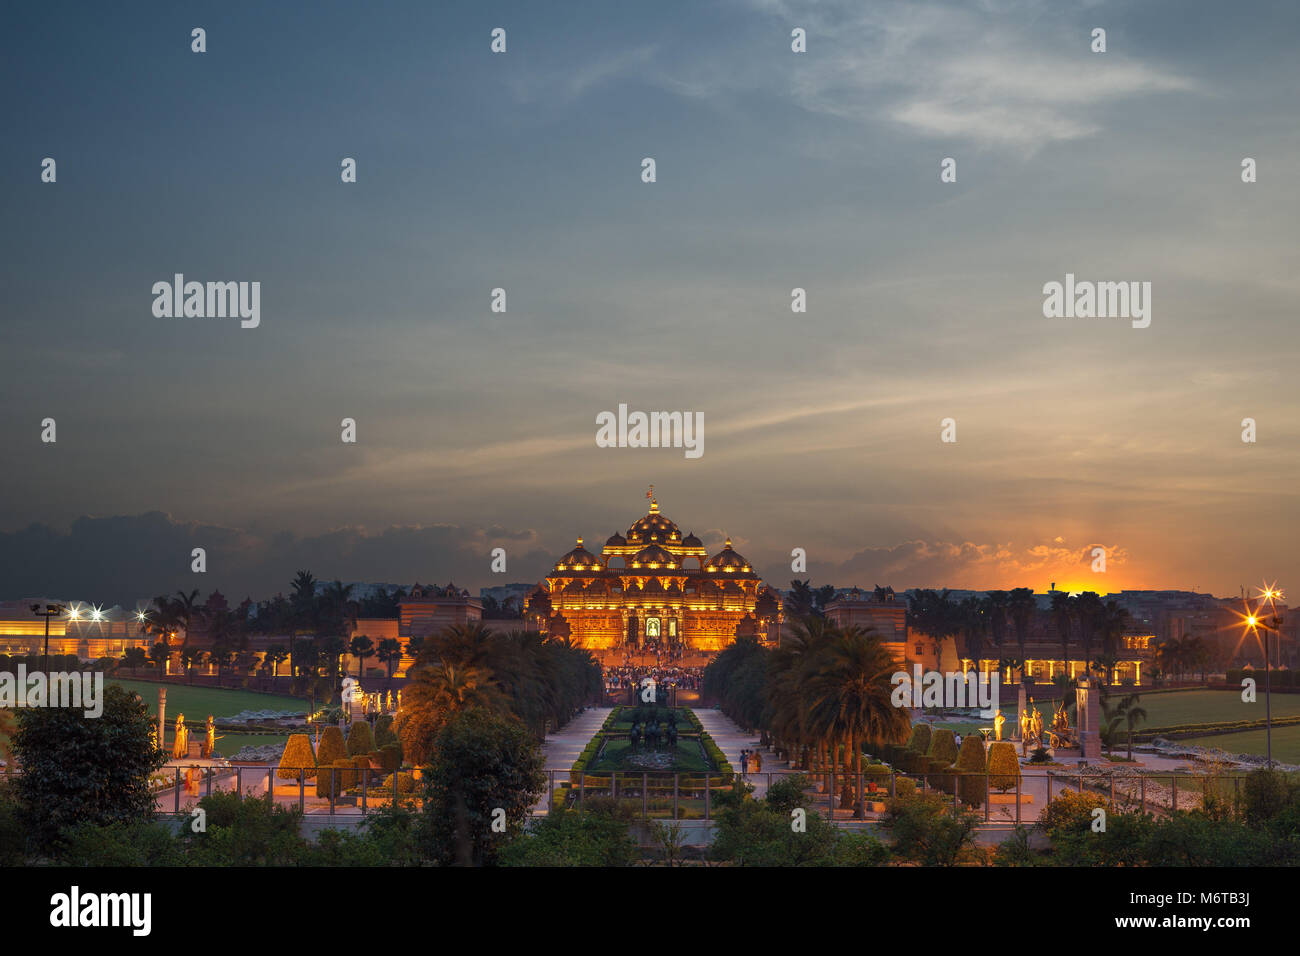 night view of akshardham temple in delhi, india Stock Photo